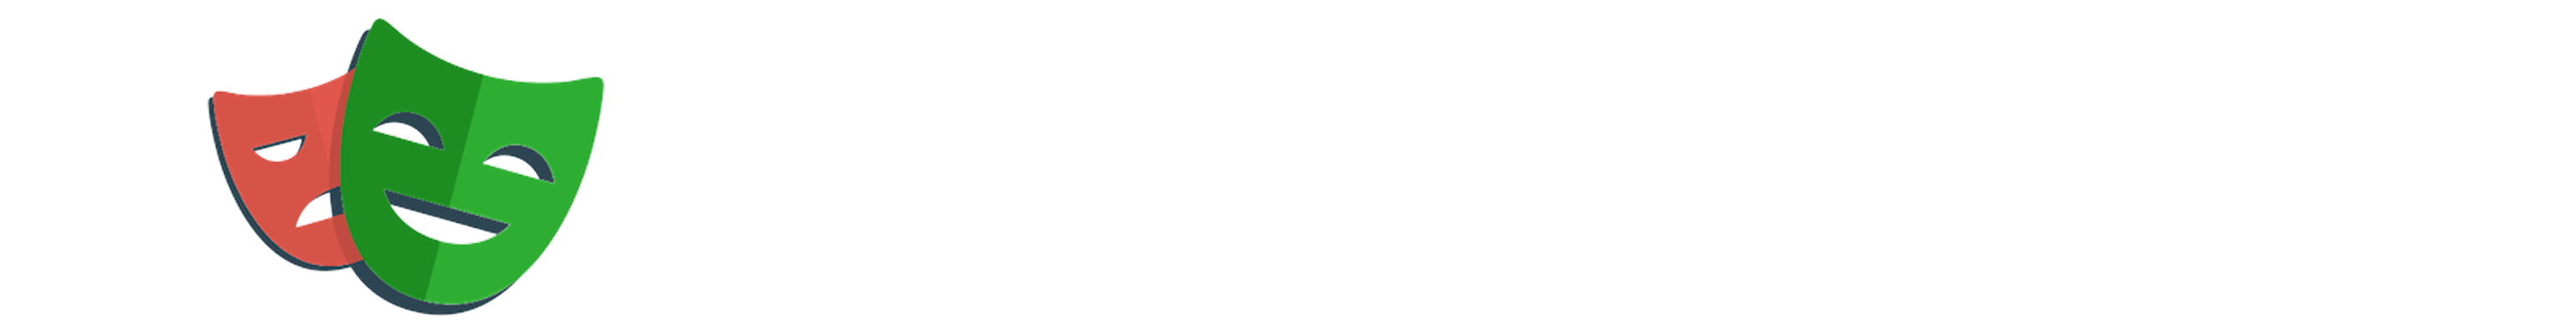 Playwright logo